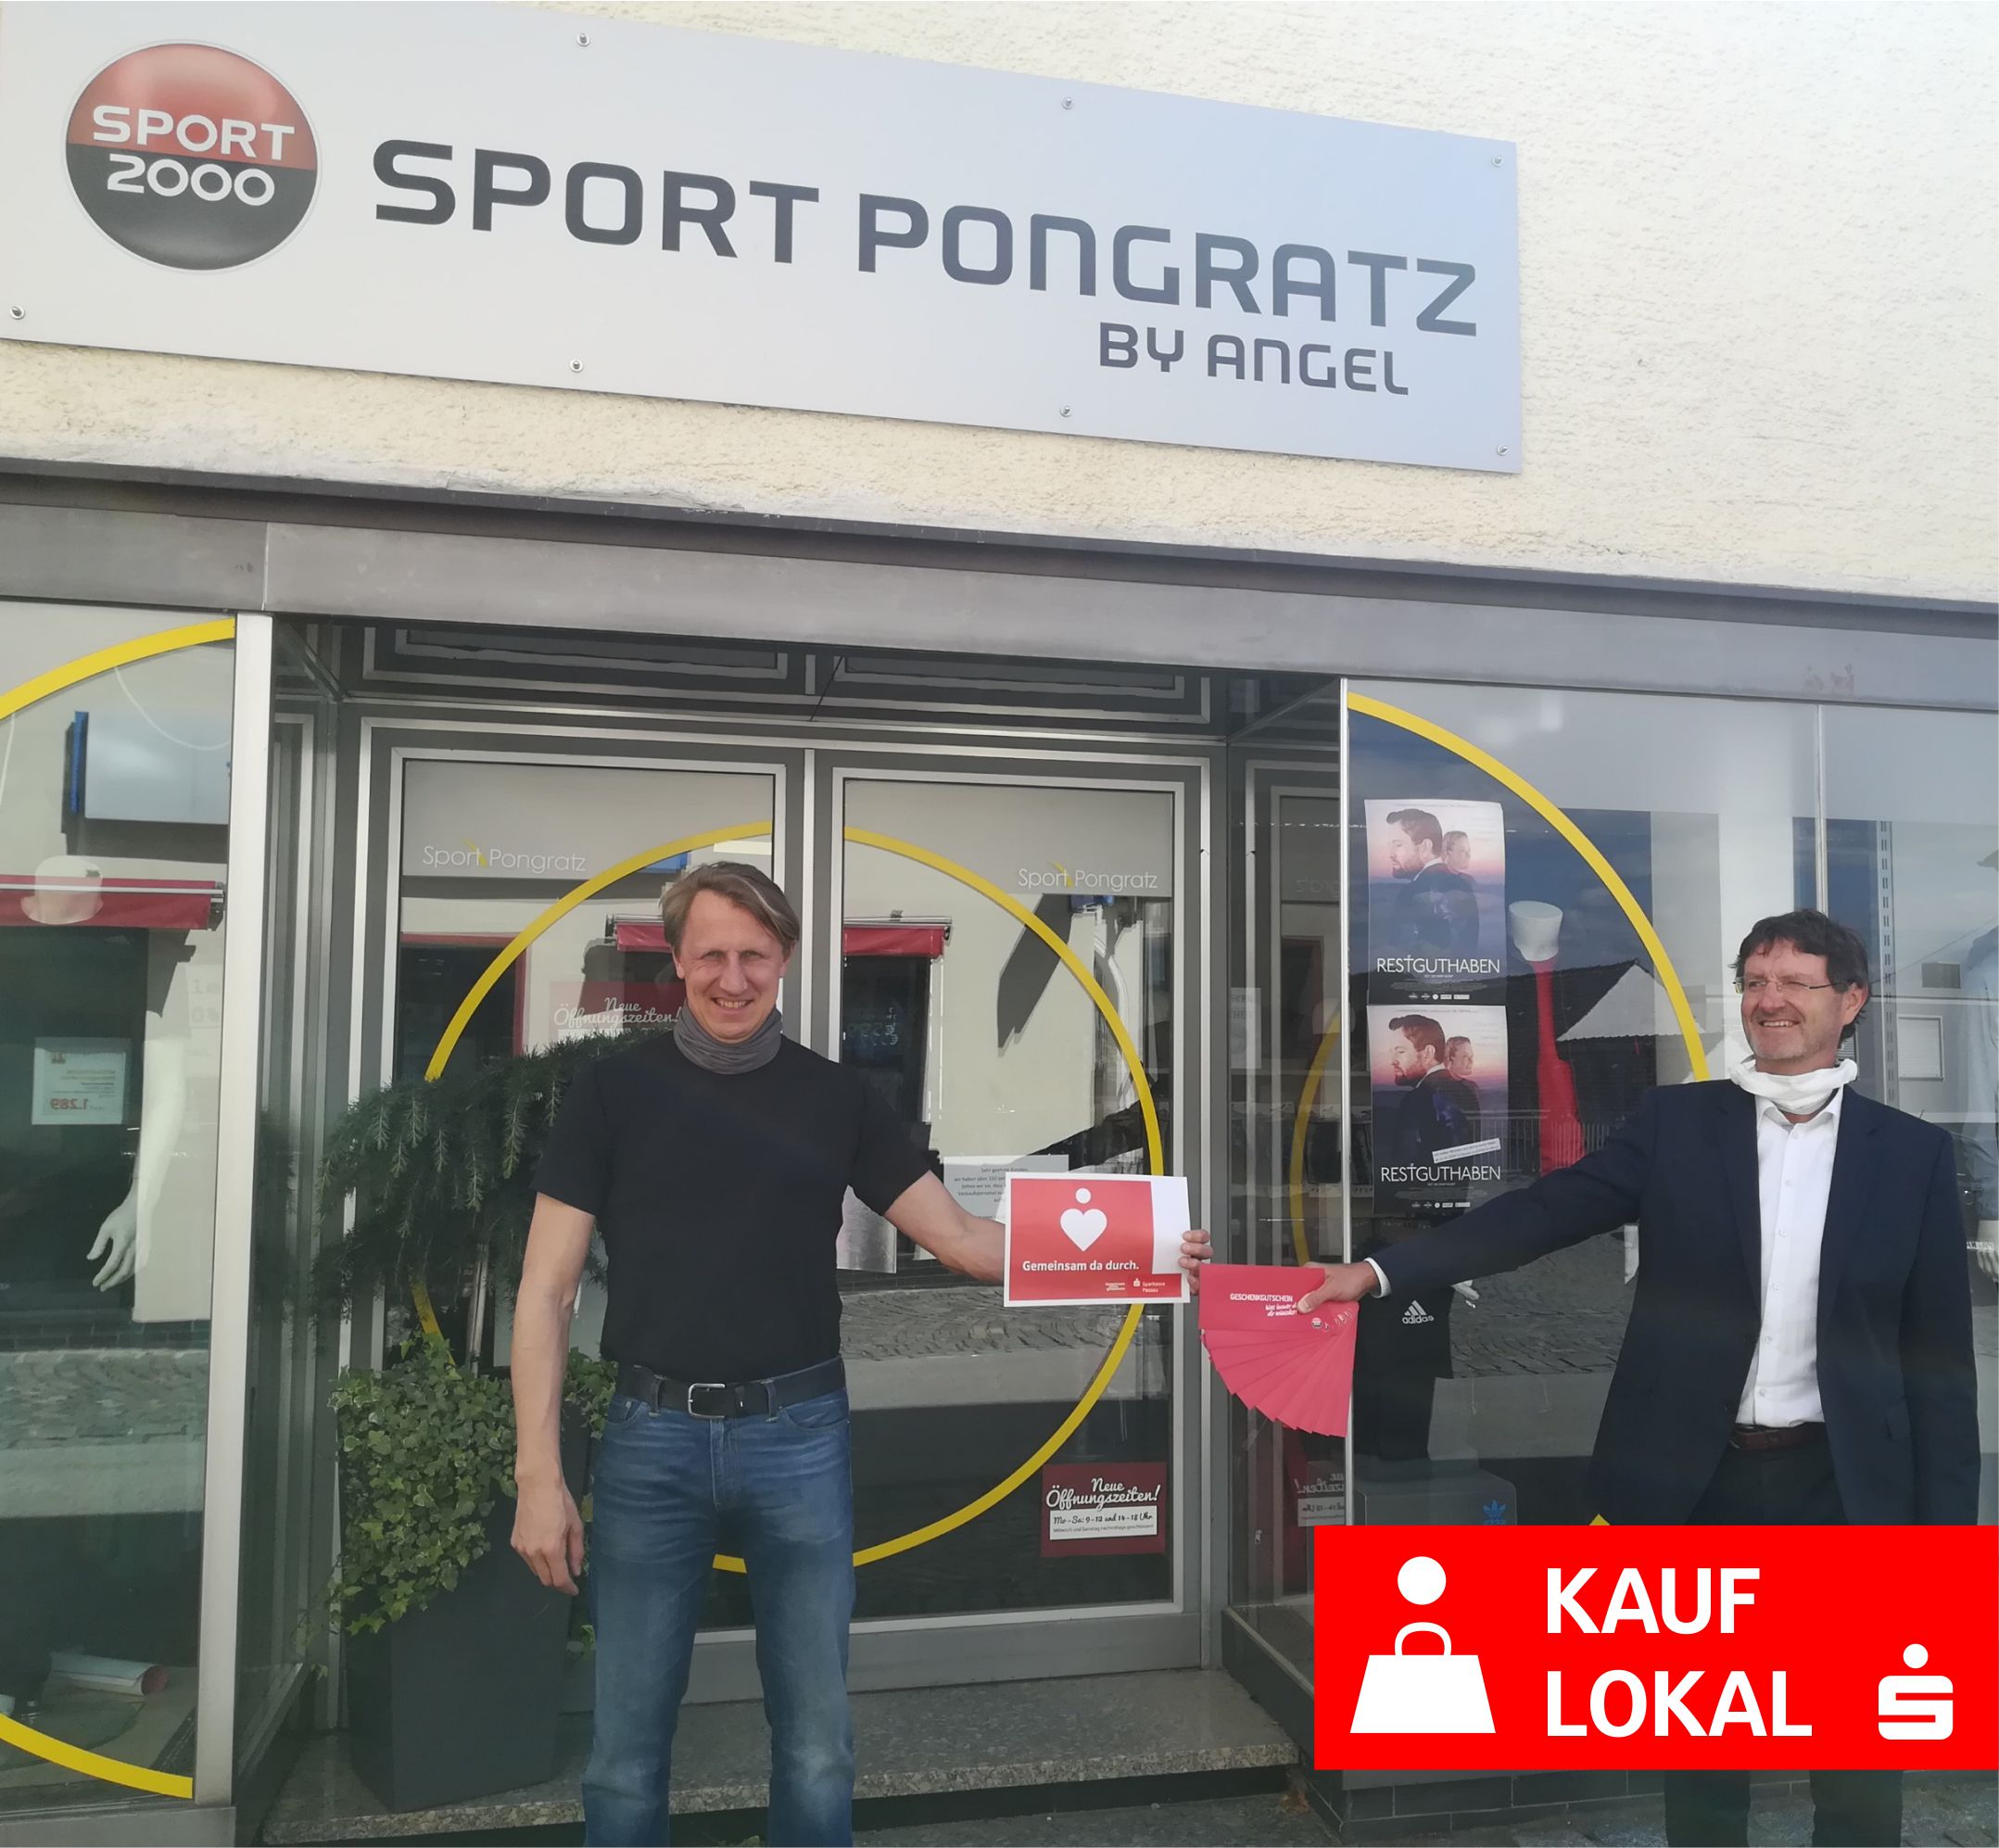 Sport-Pongratz-GS-Eging_Kauf-lokal